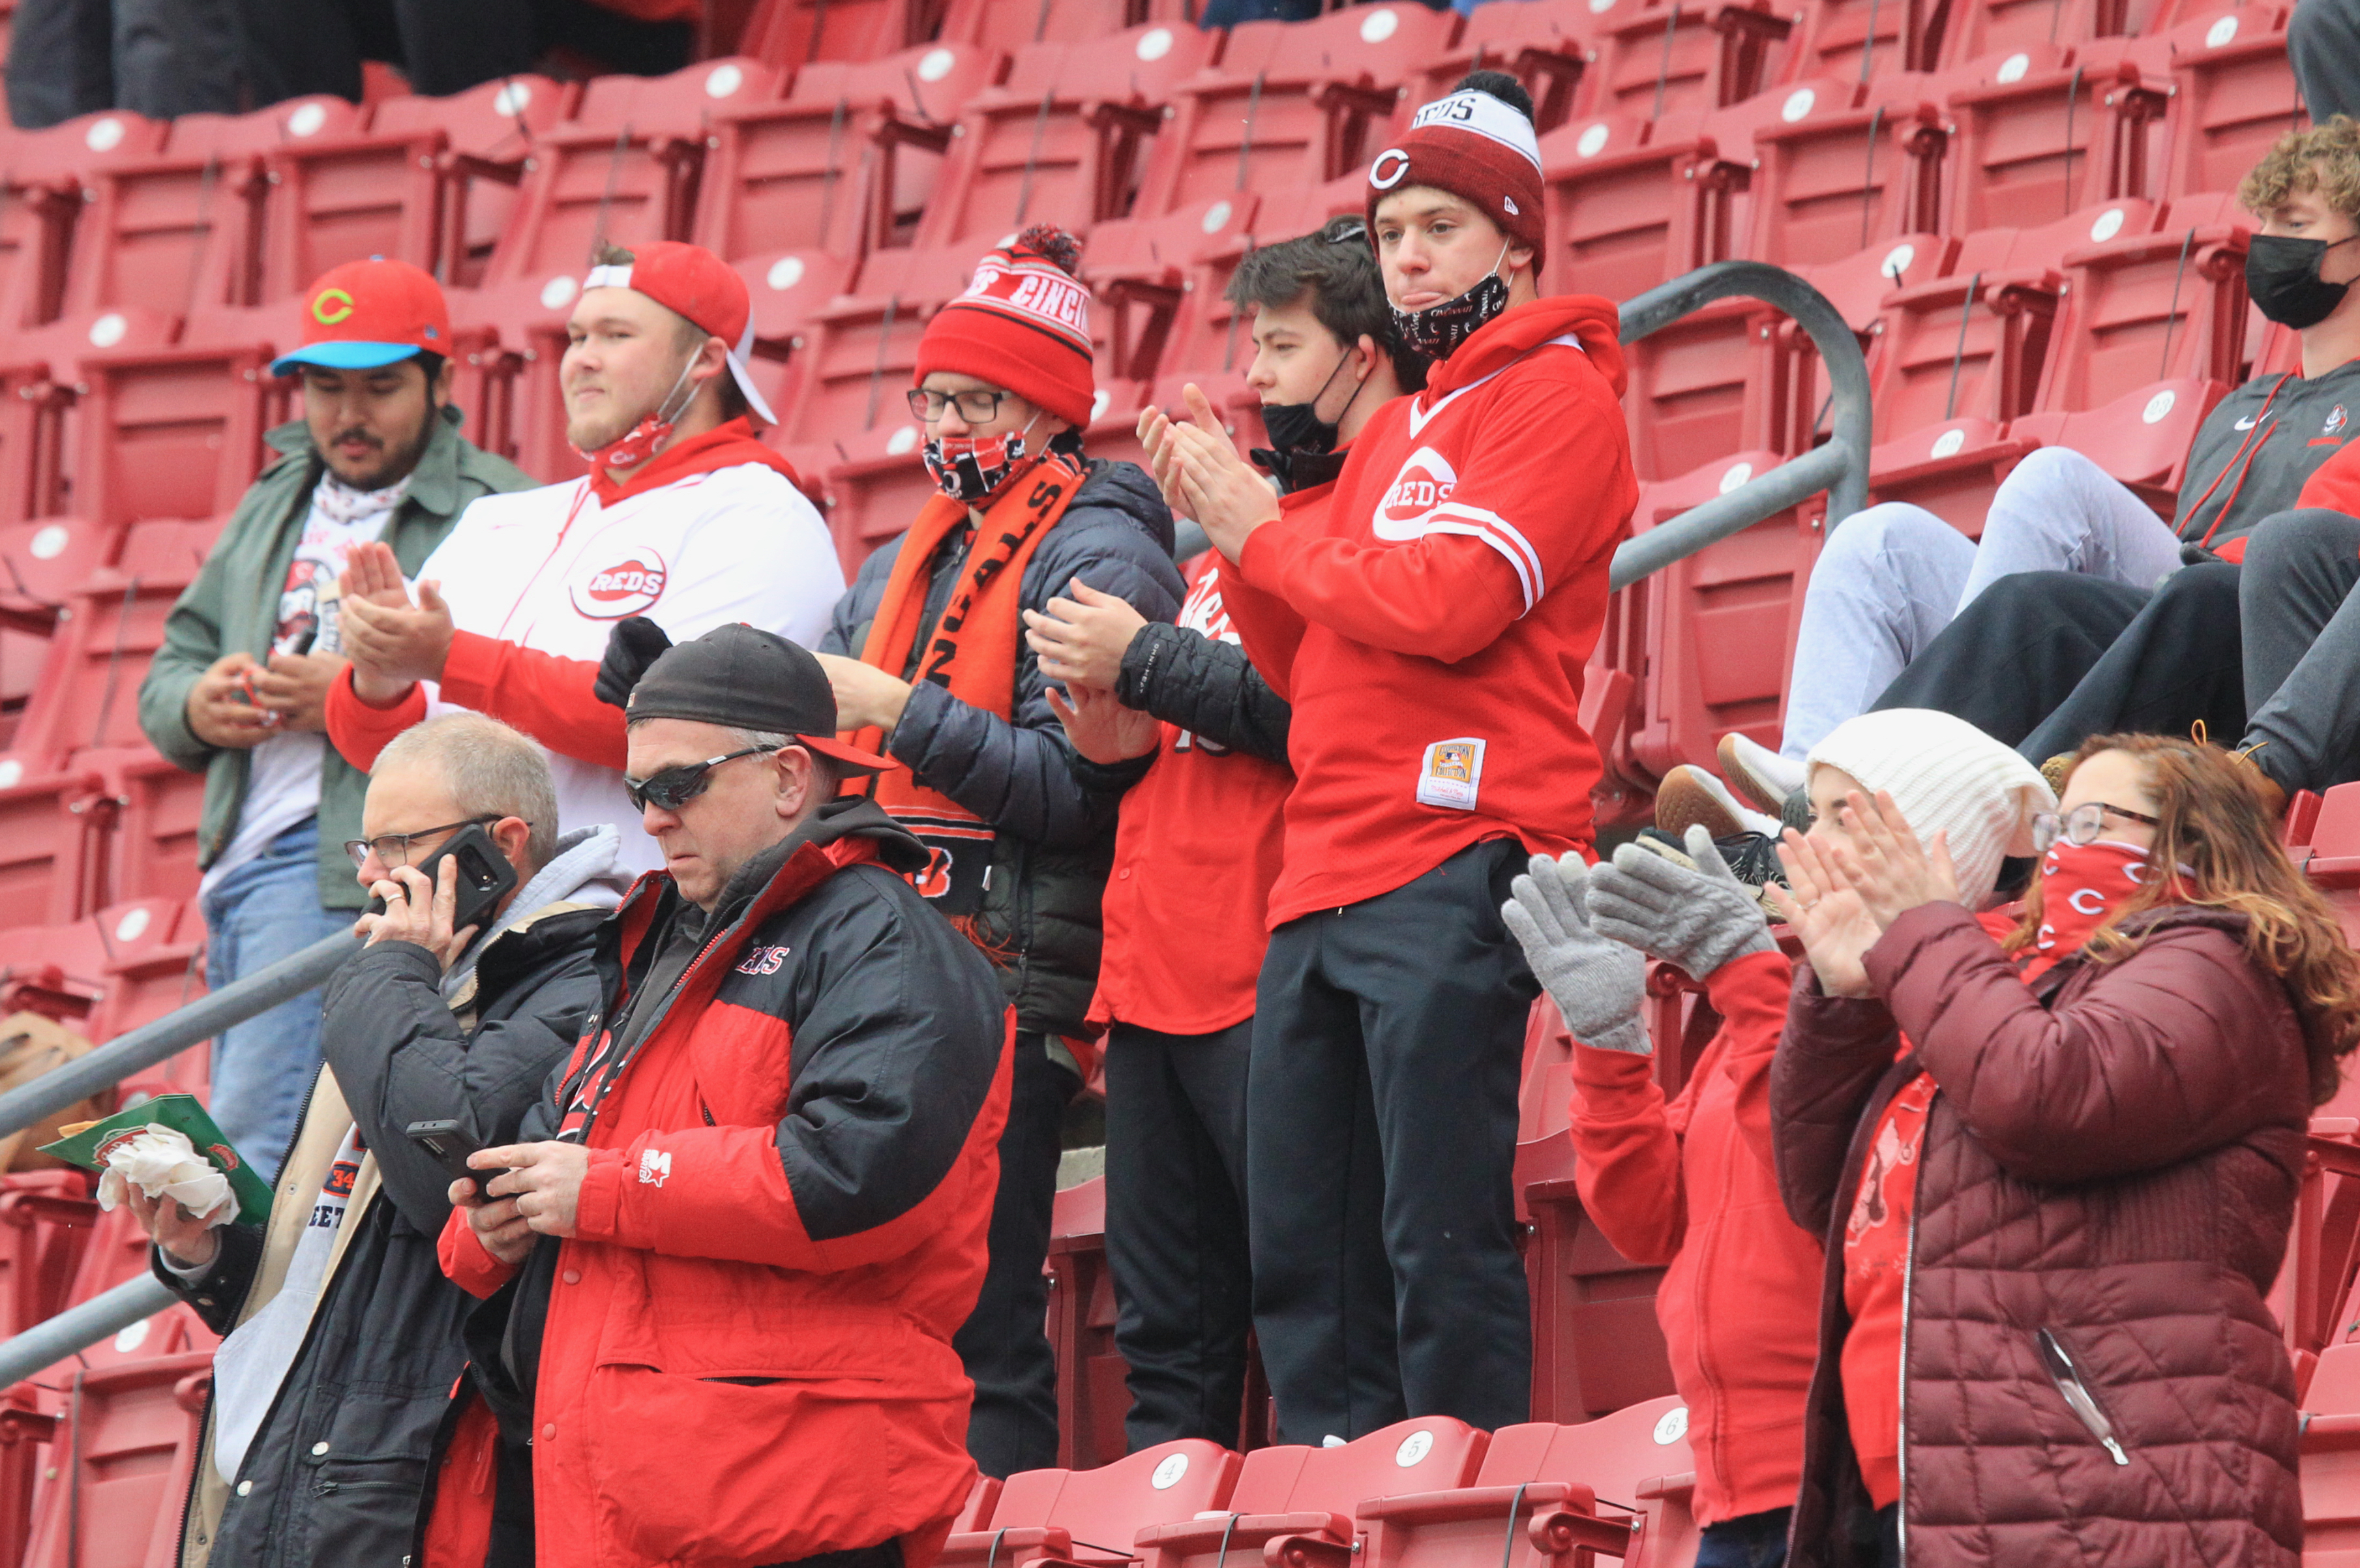 Cincinnati Reds - The Reds Team Shop at GABP reopens